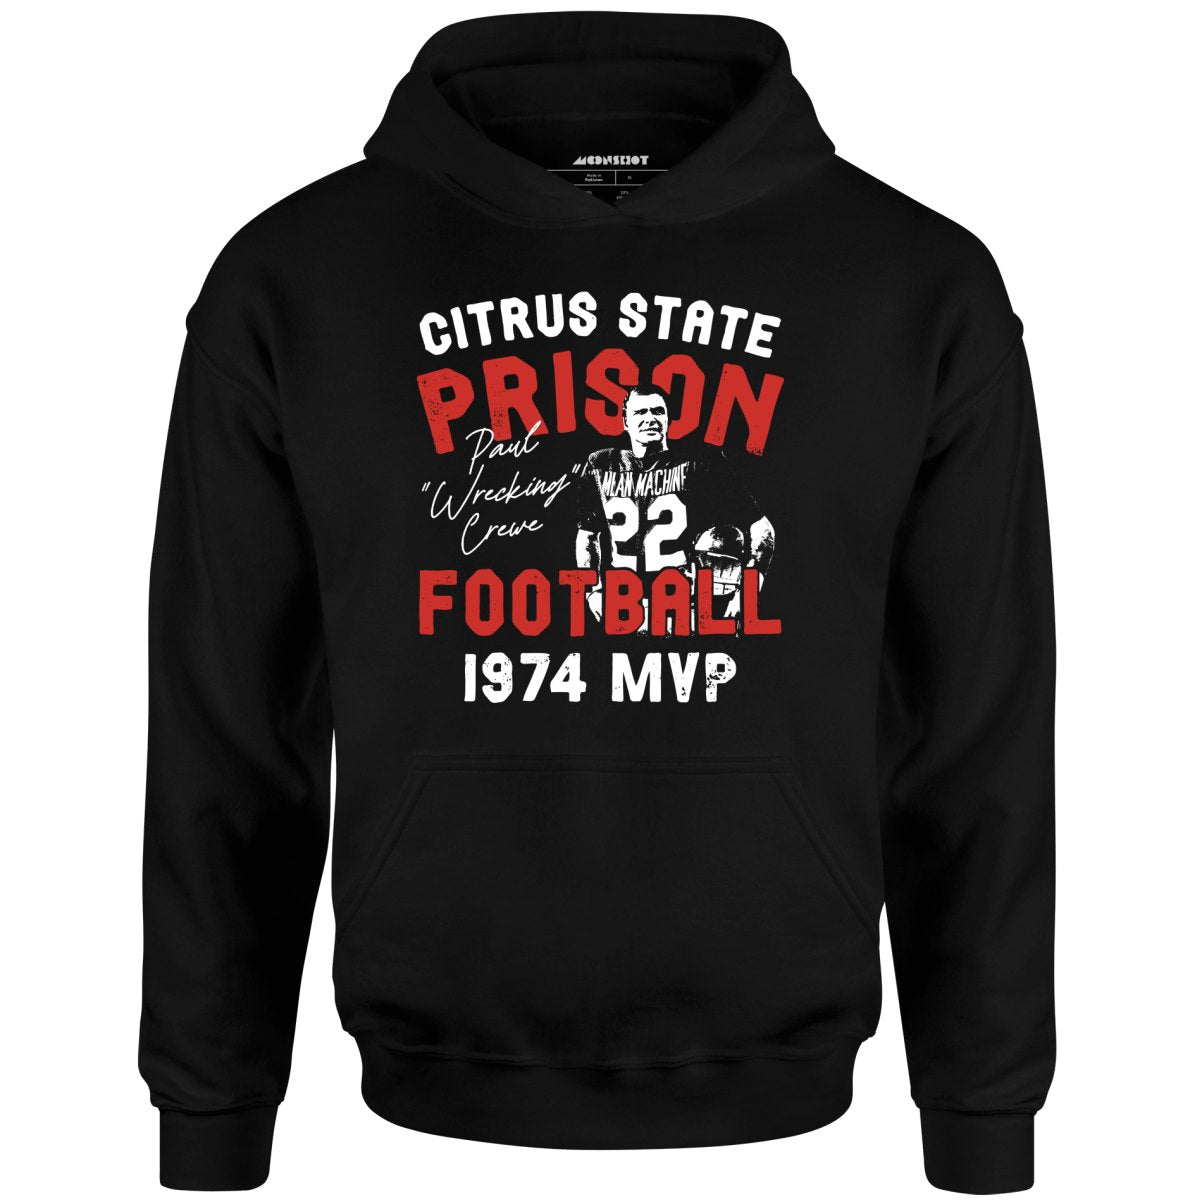 Mean Machine Citrus State Prison Football - Unisex Hoodie